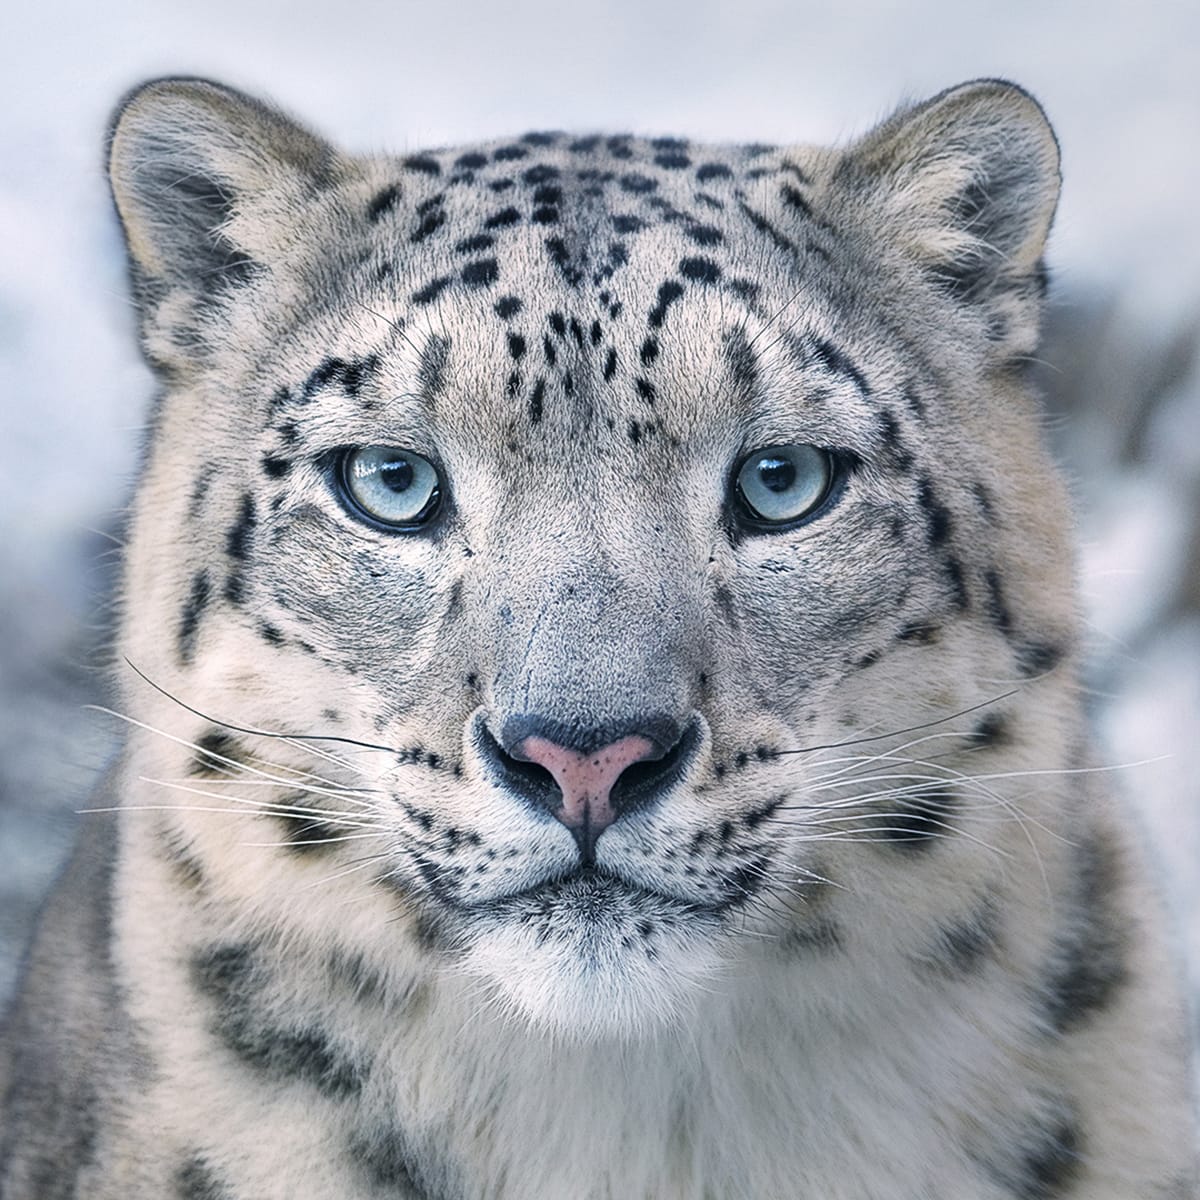 echofinearts-tim-flach-snow-leopard-2017.jpg